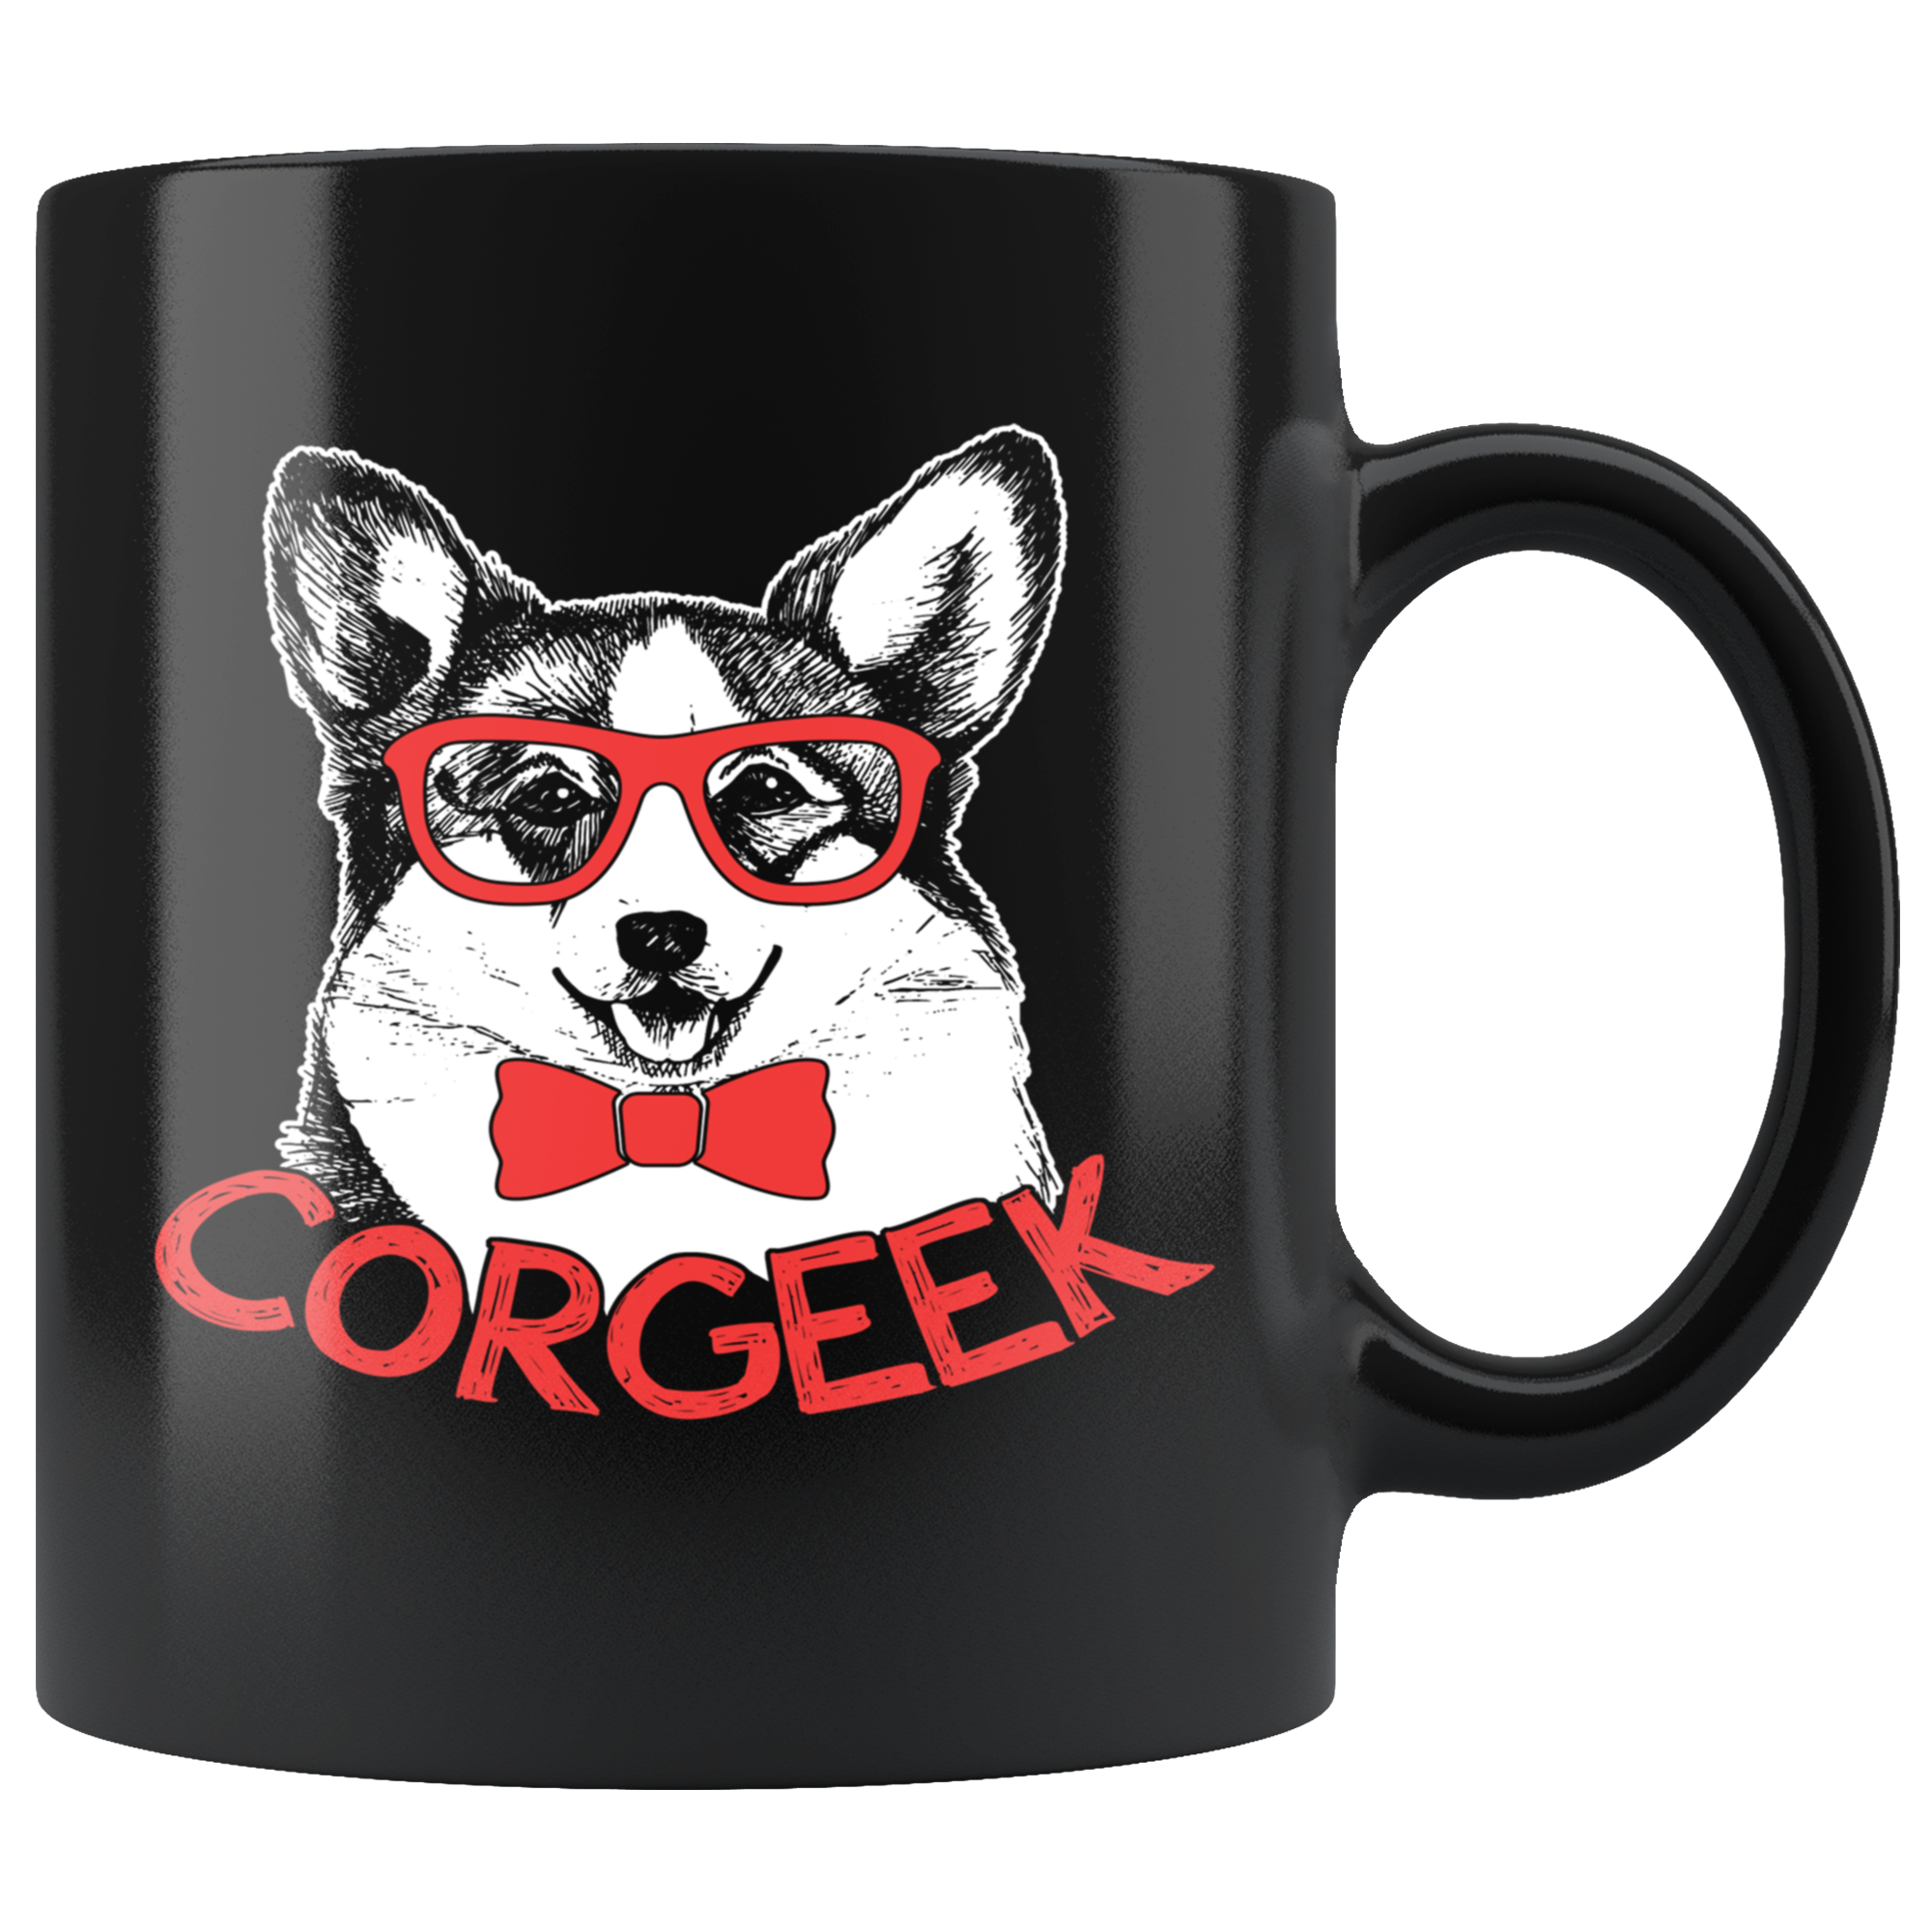 Corgeek Black Mug